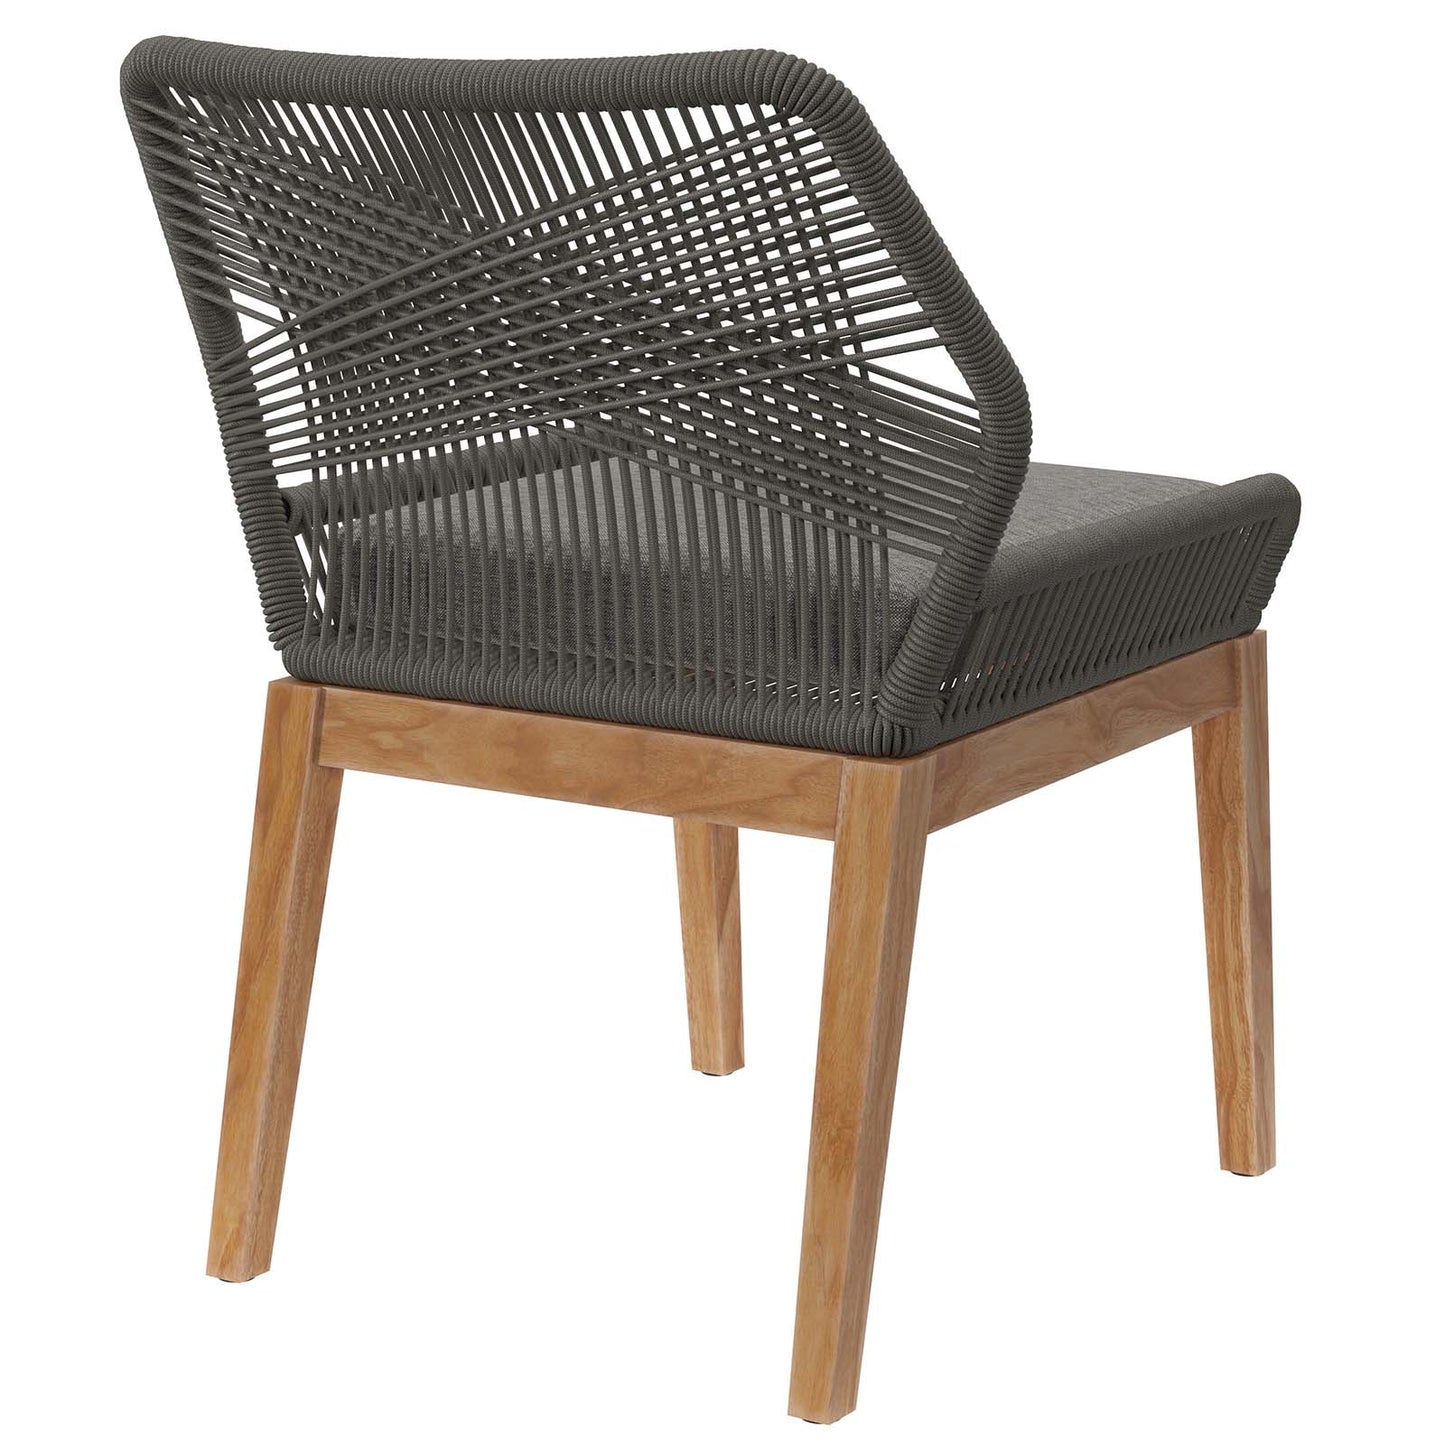 Wellspring Outdoor Patio Teak Wood Dining Chair Gray Graphite EEI-5747-GRY-GPH